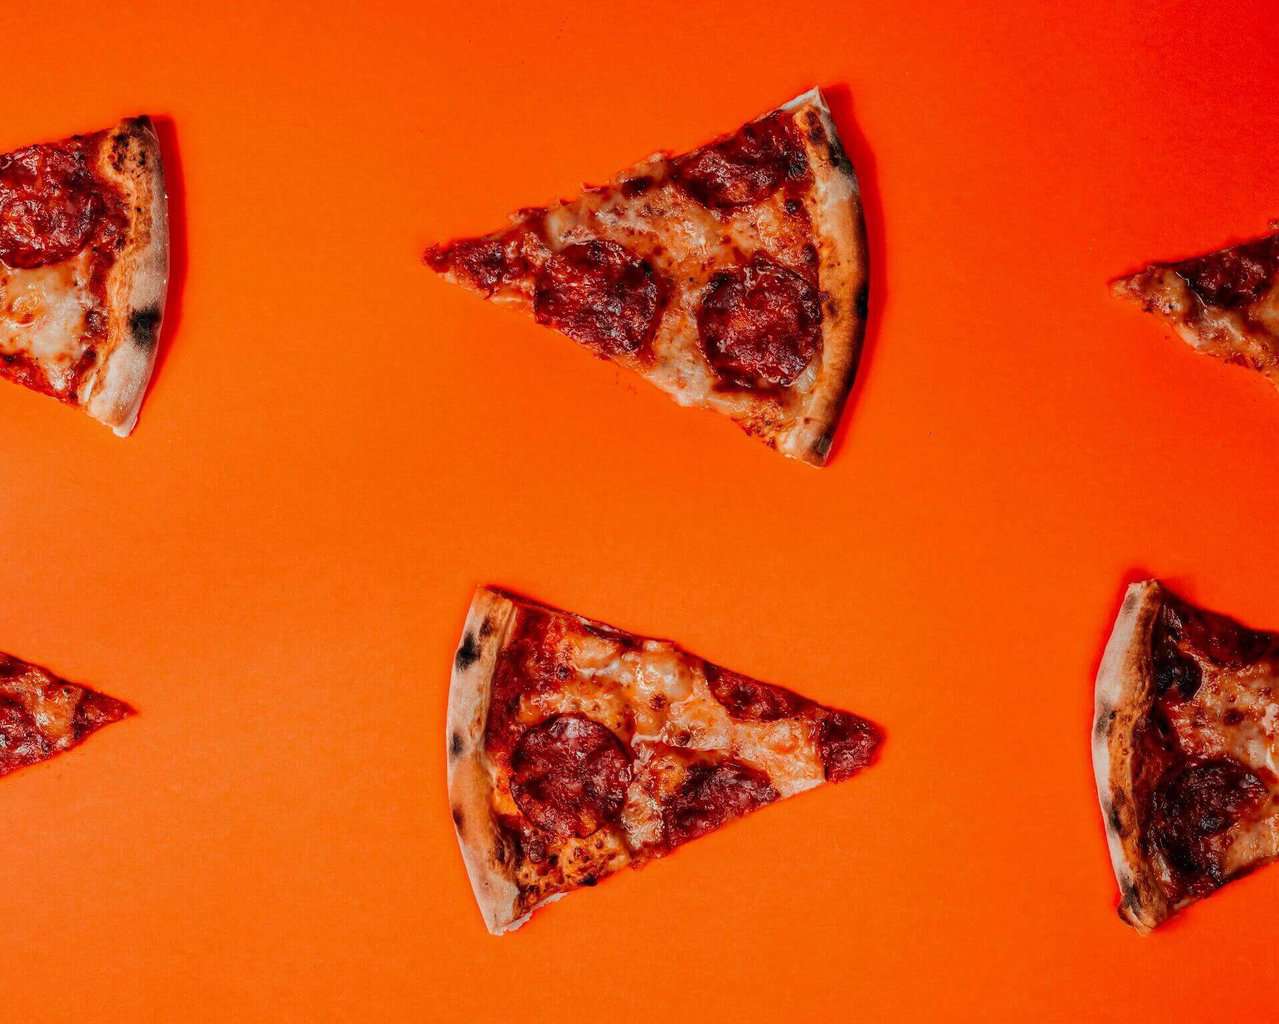 Slices of pizza on orange background